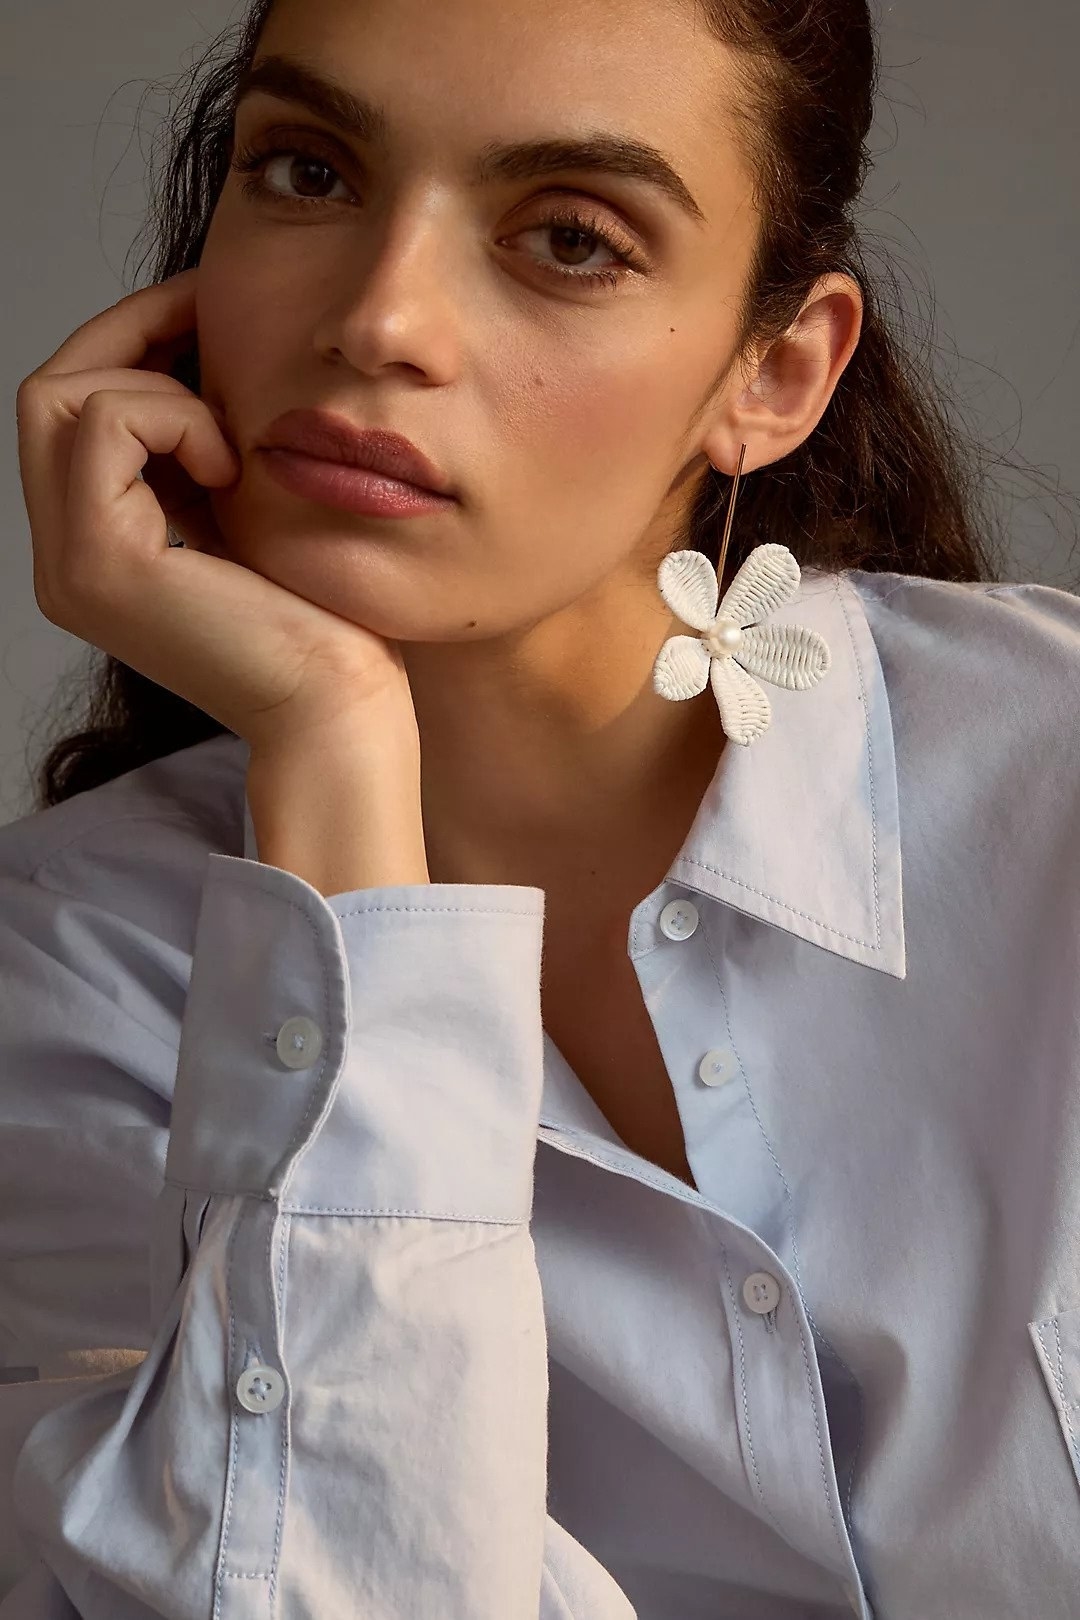 Model wearing gold earrings with white flower at bottom